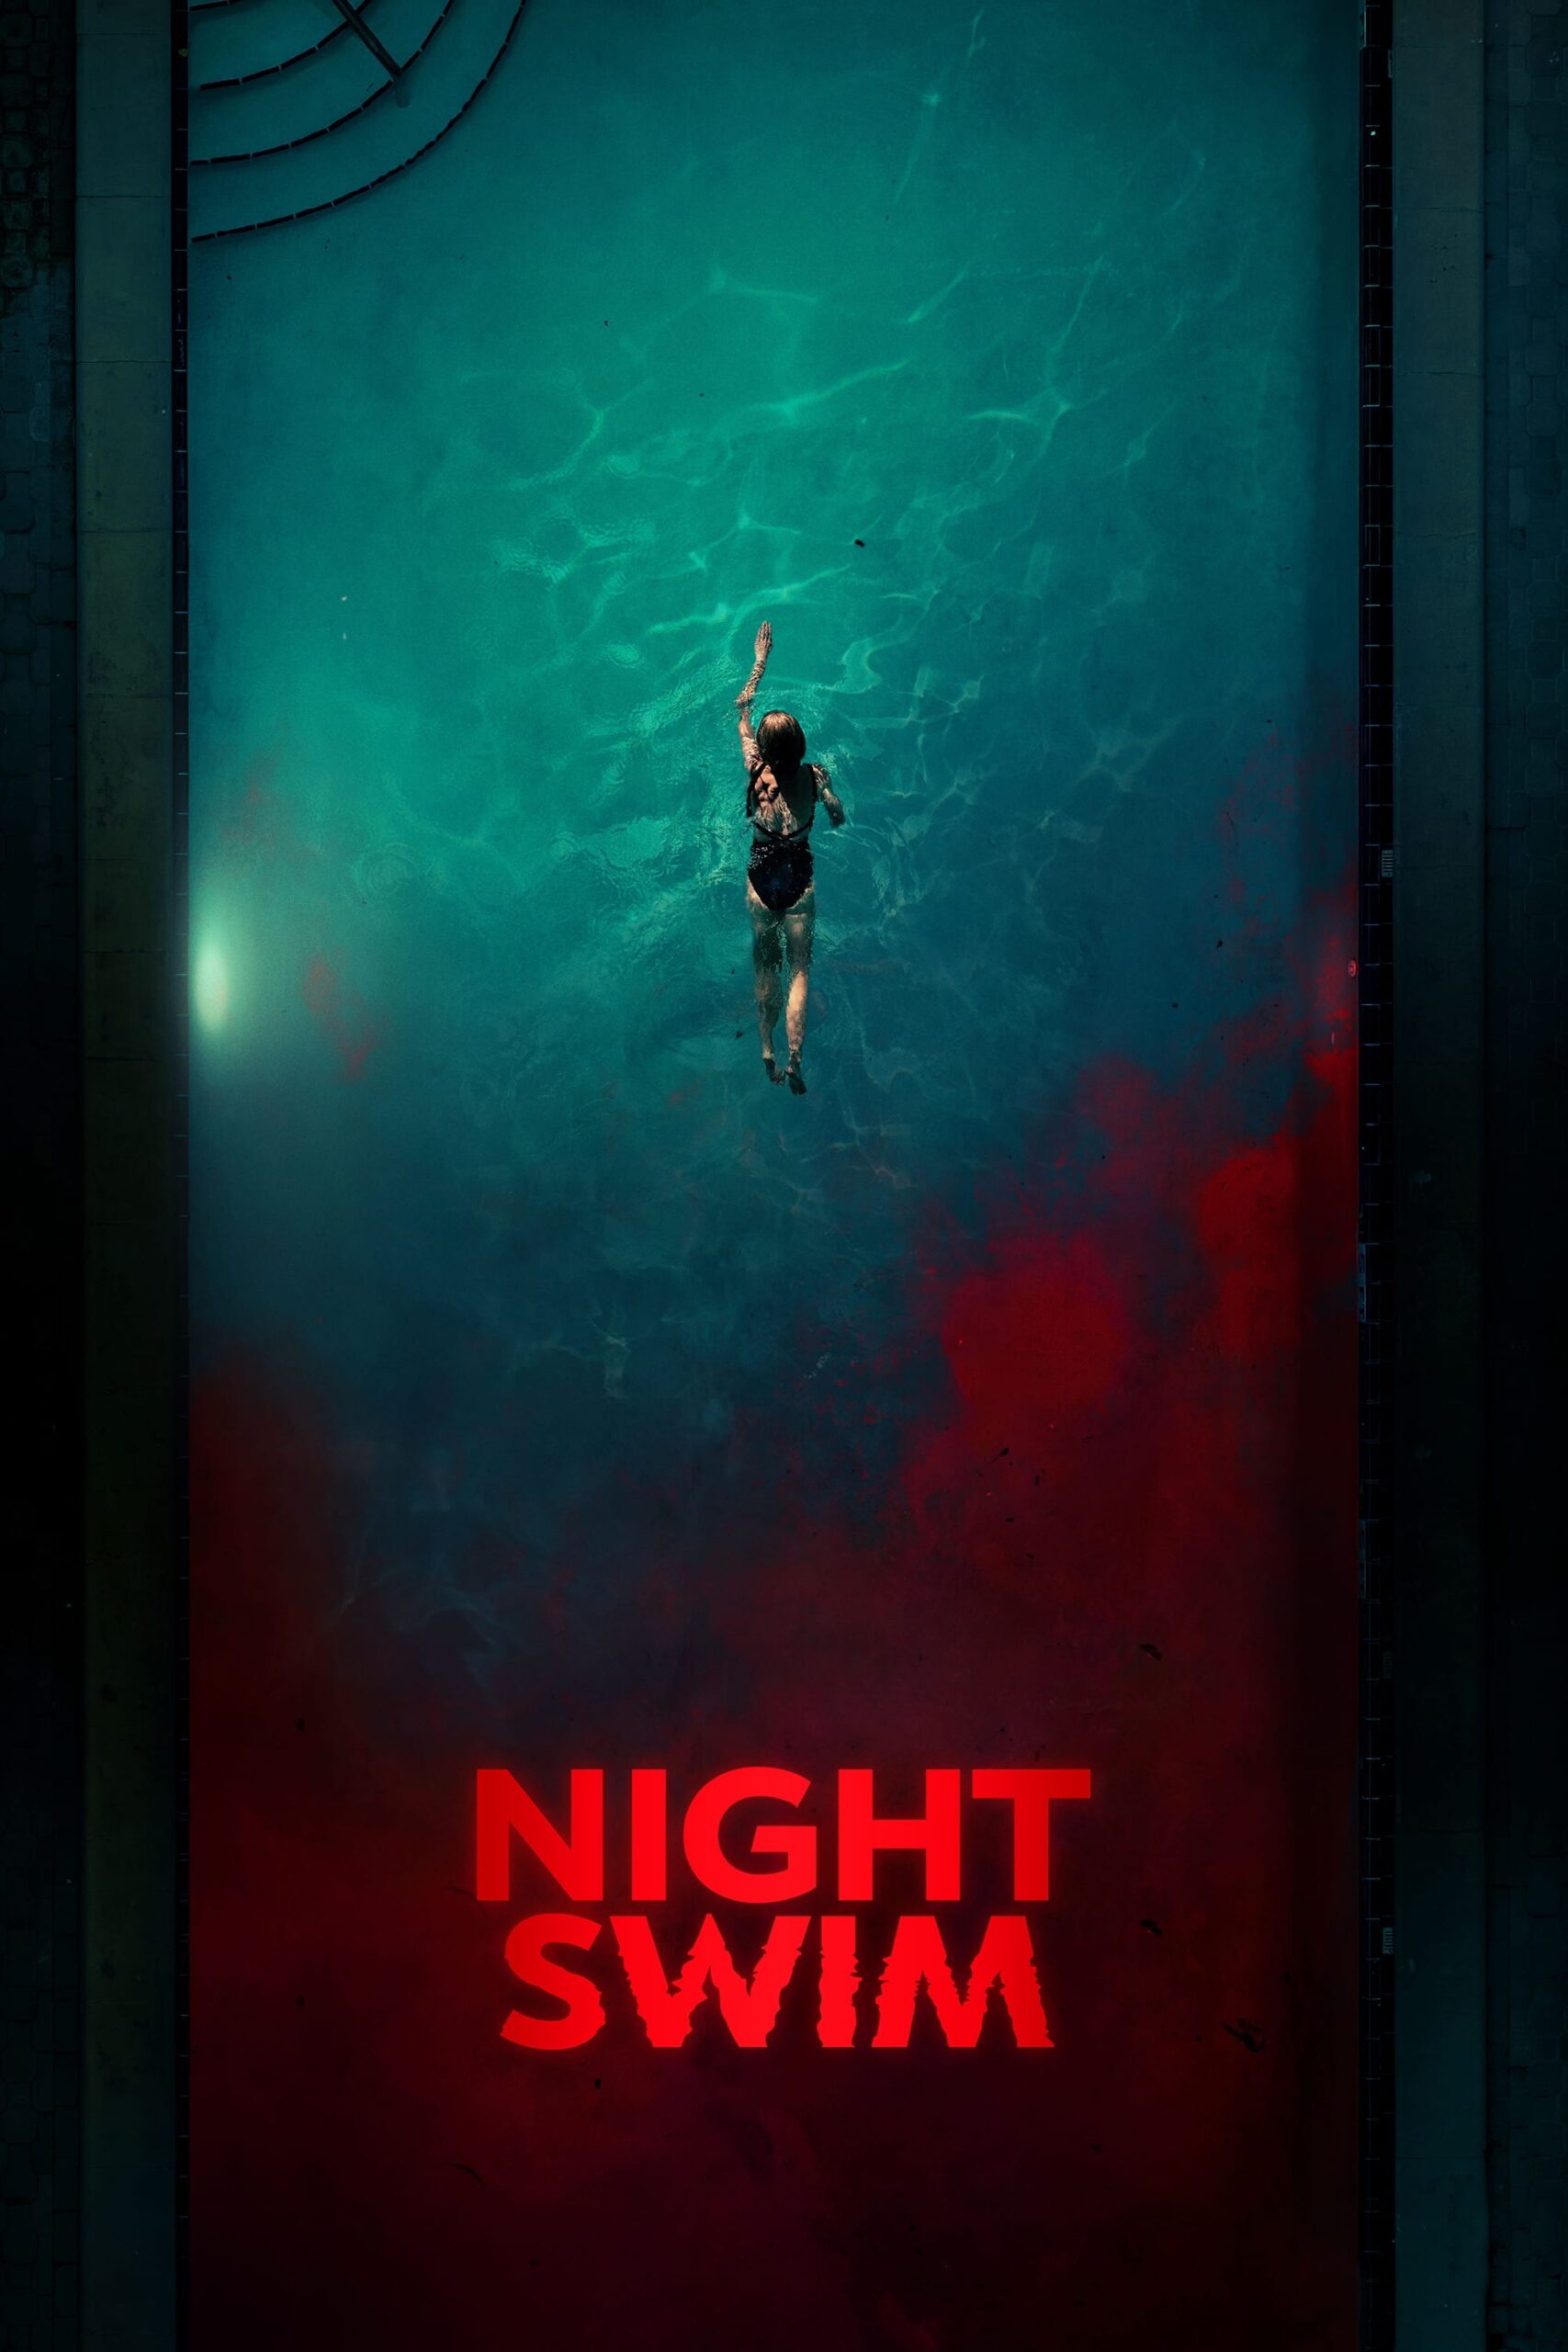 Poster for Night Swim